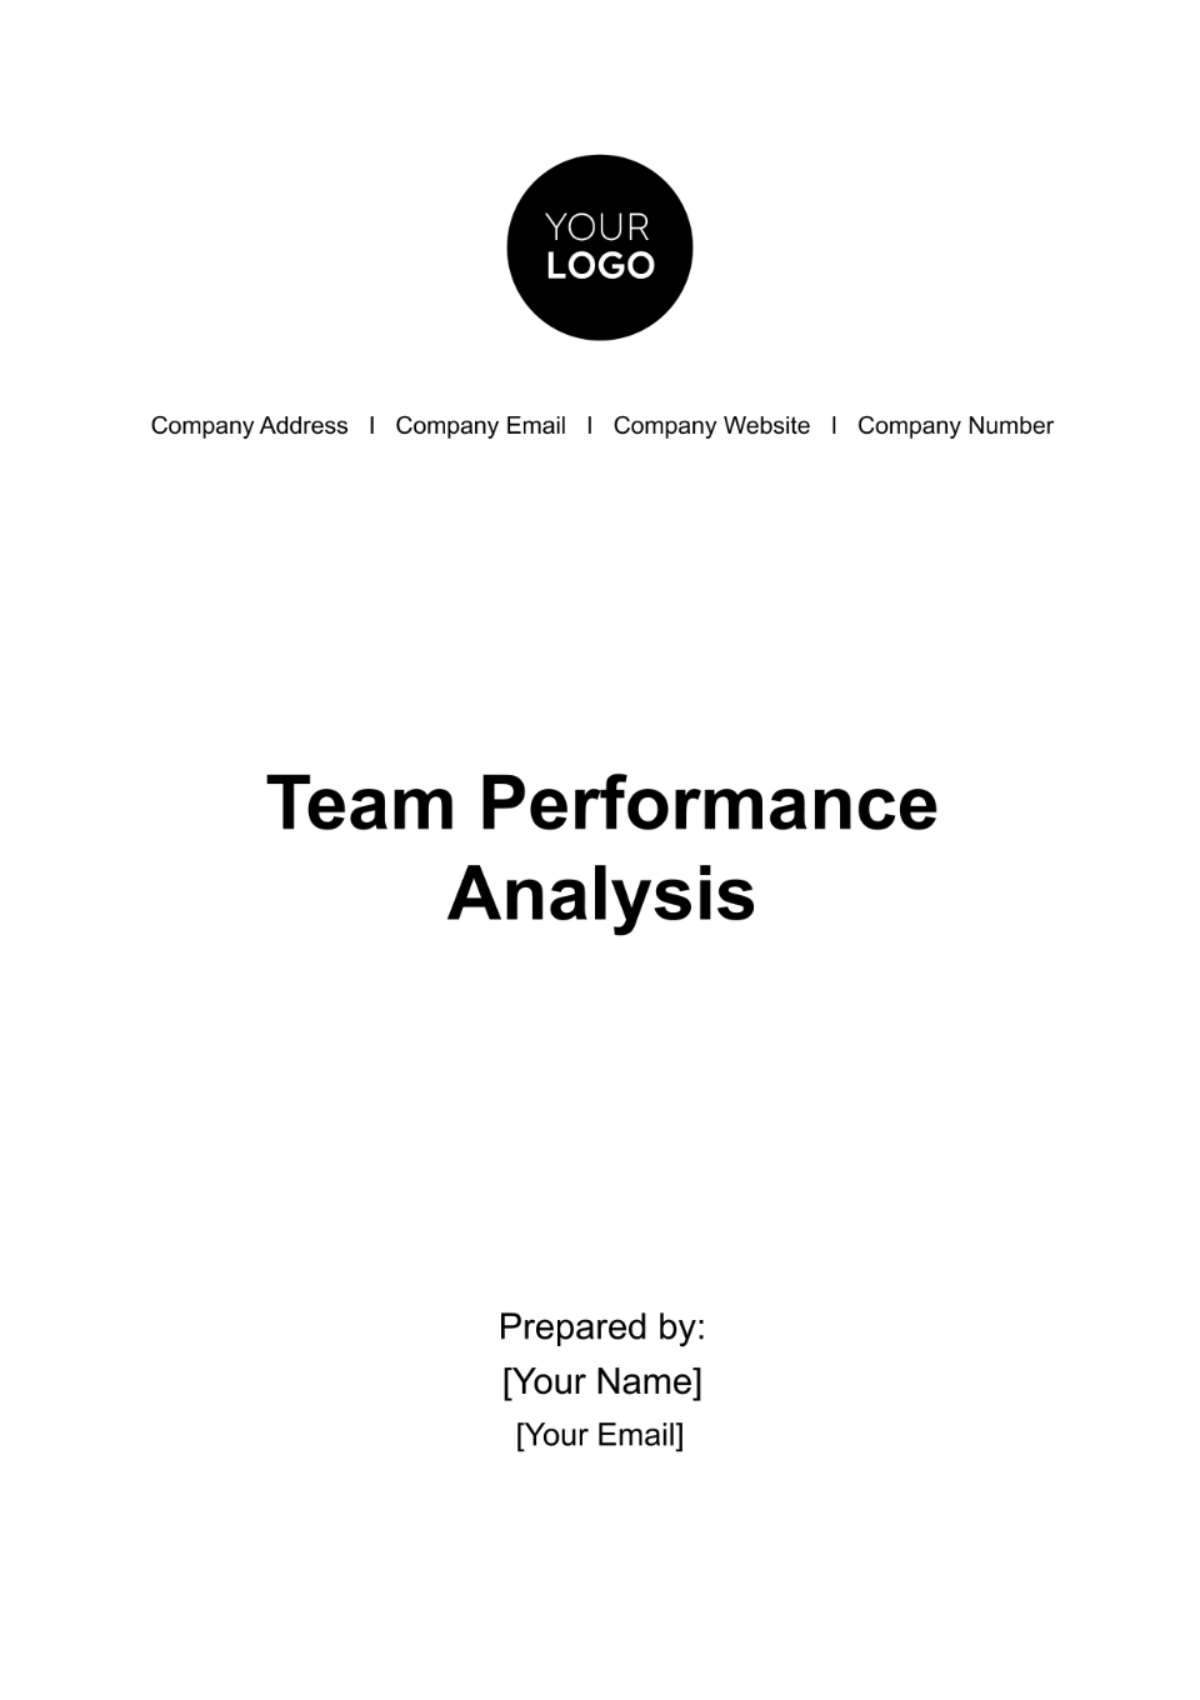 Team Performance Analysis HR Template